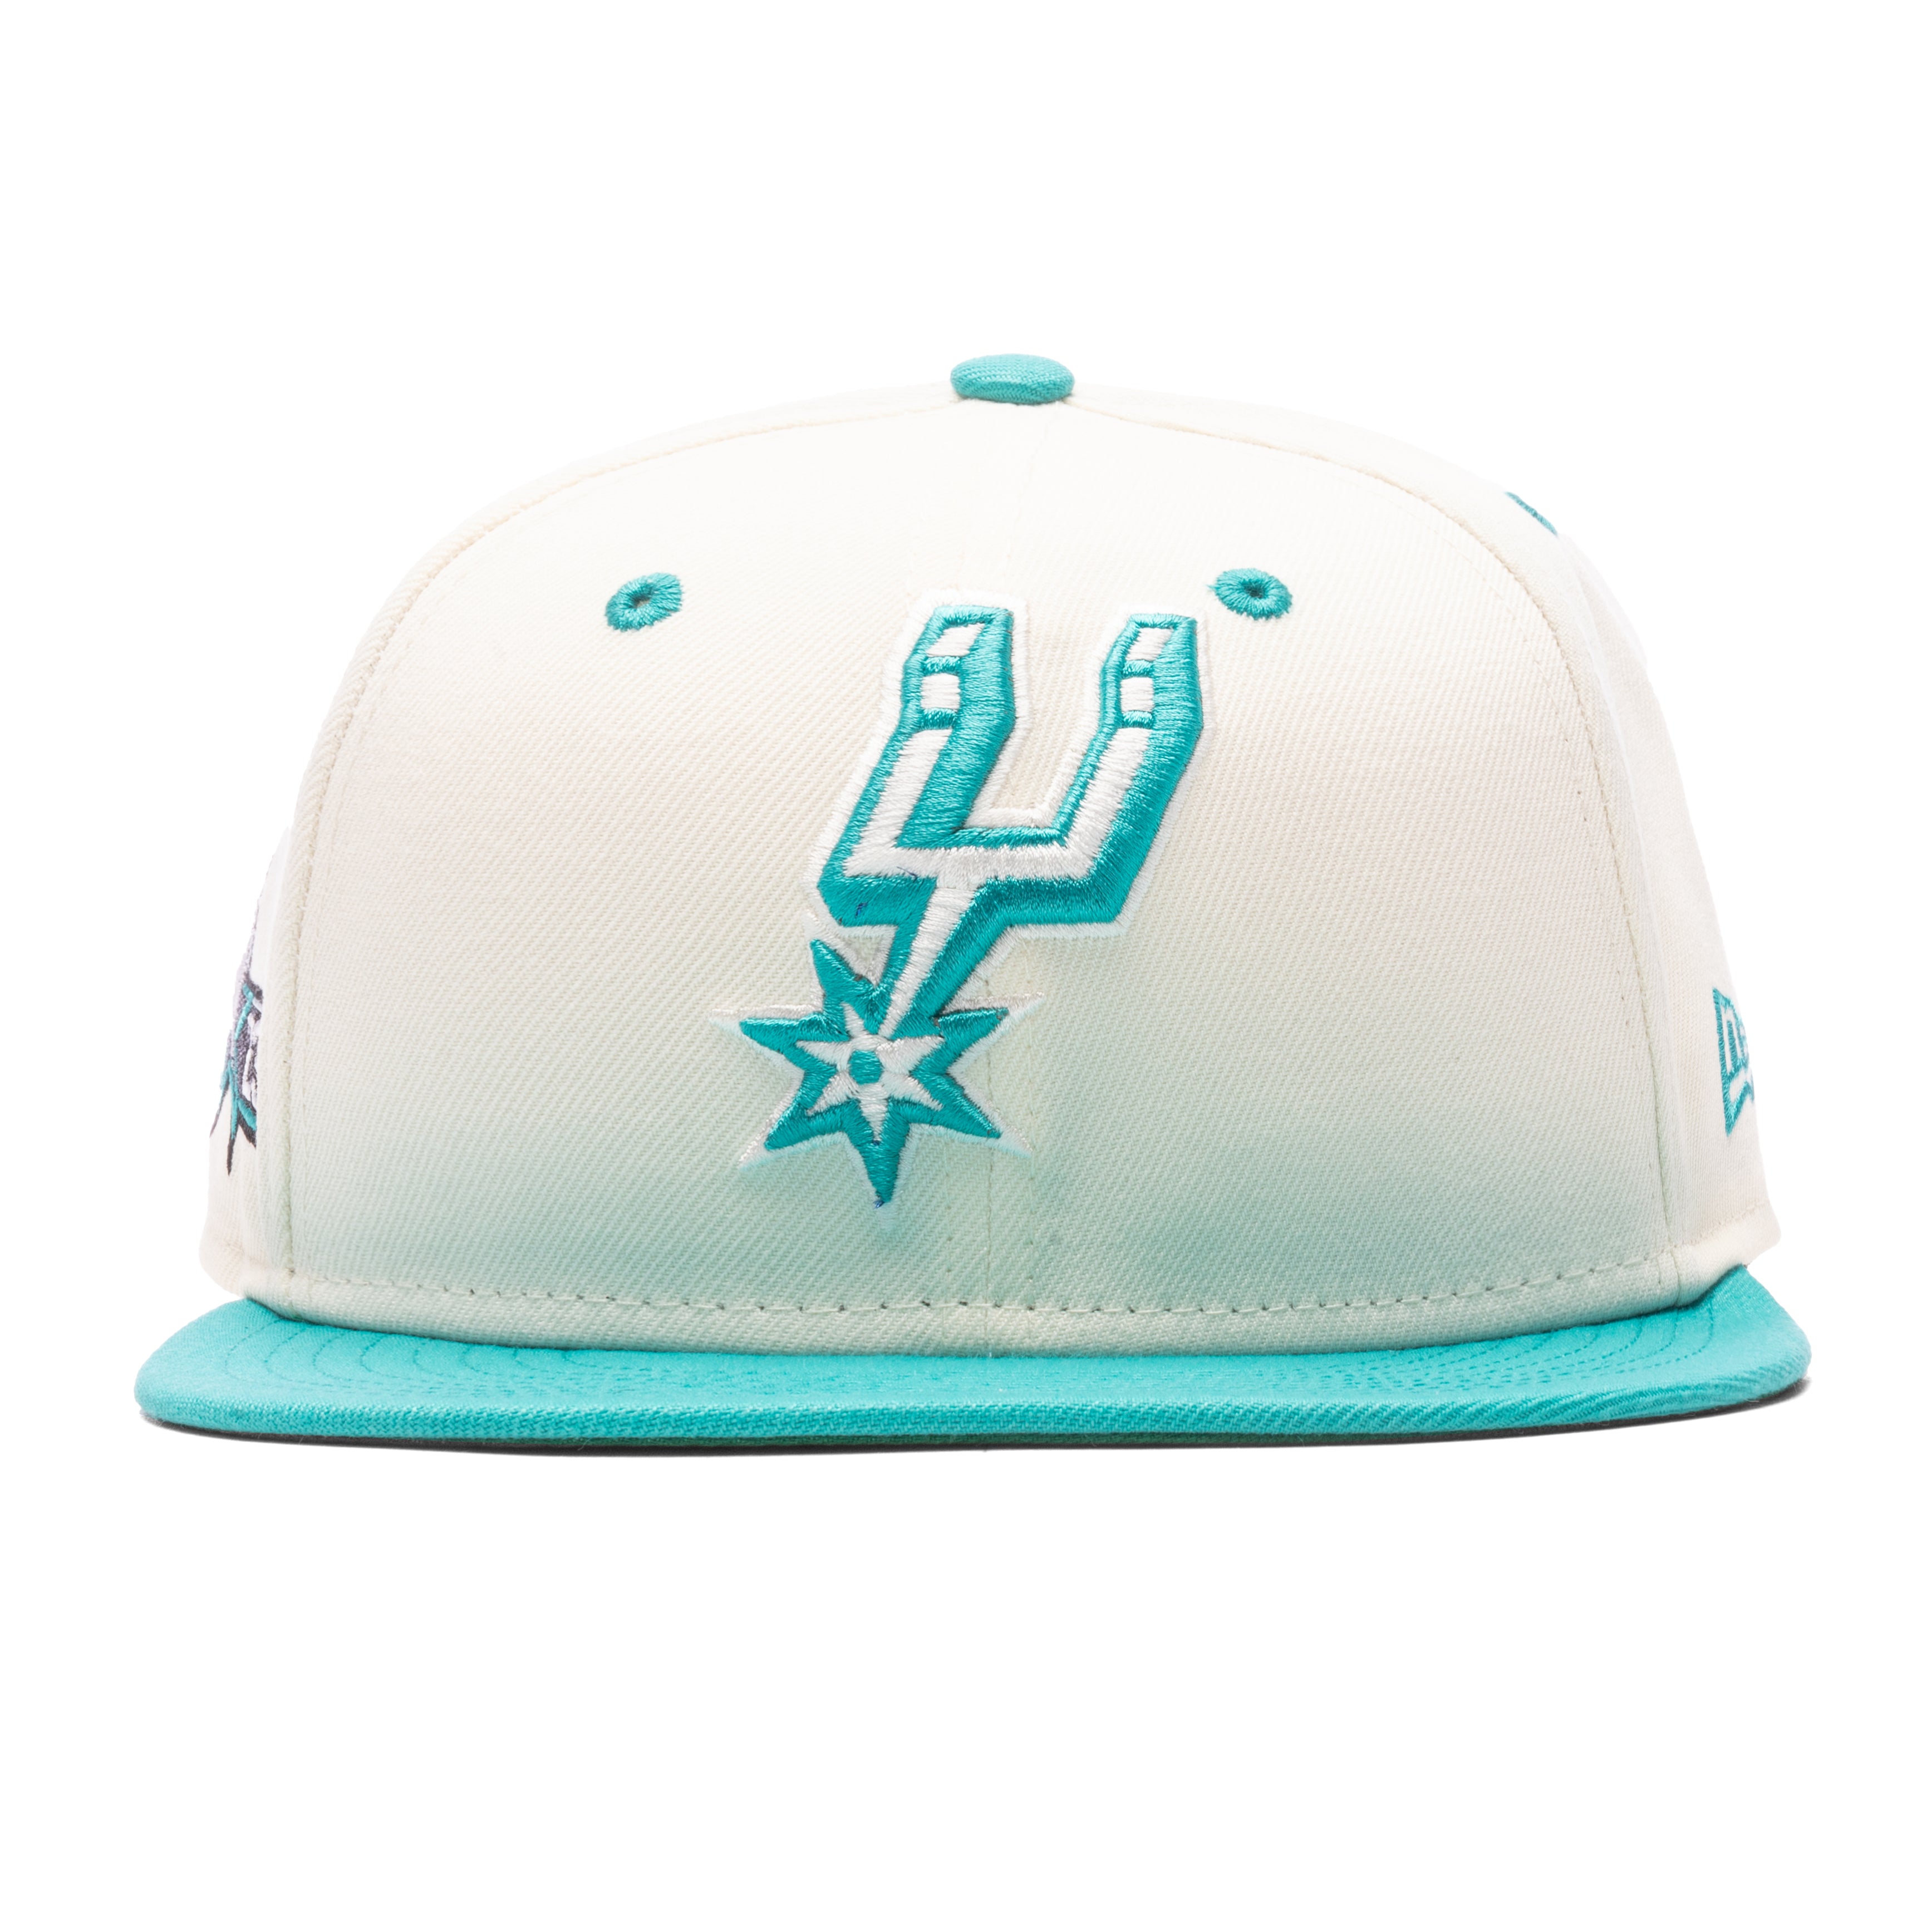 Mitchell & Ness San Antonio Spurs All Star Color Snapback Hat, Black/Pink